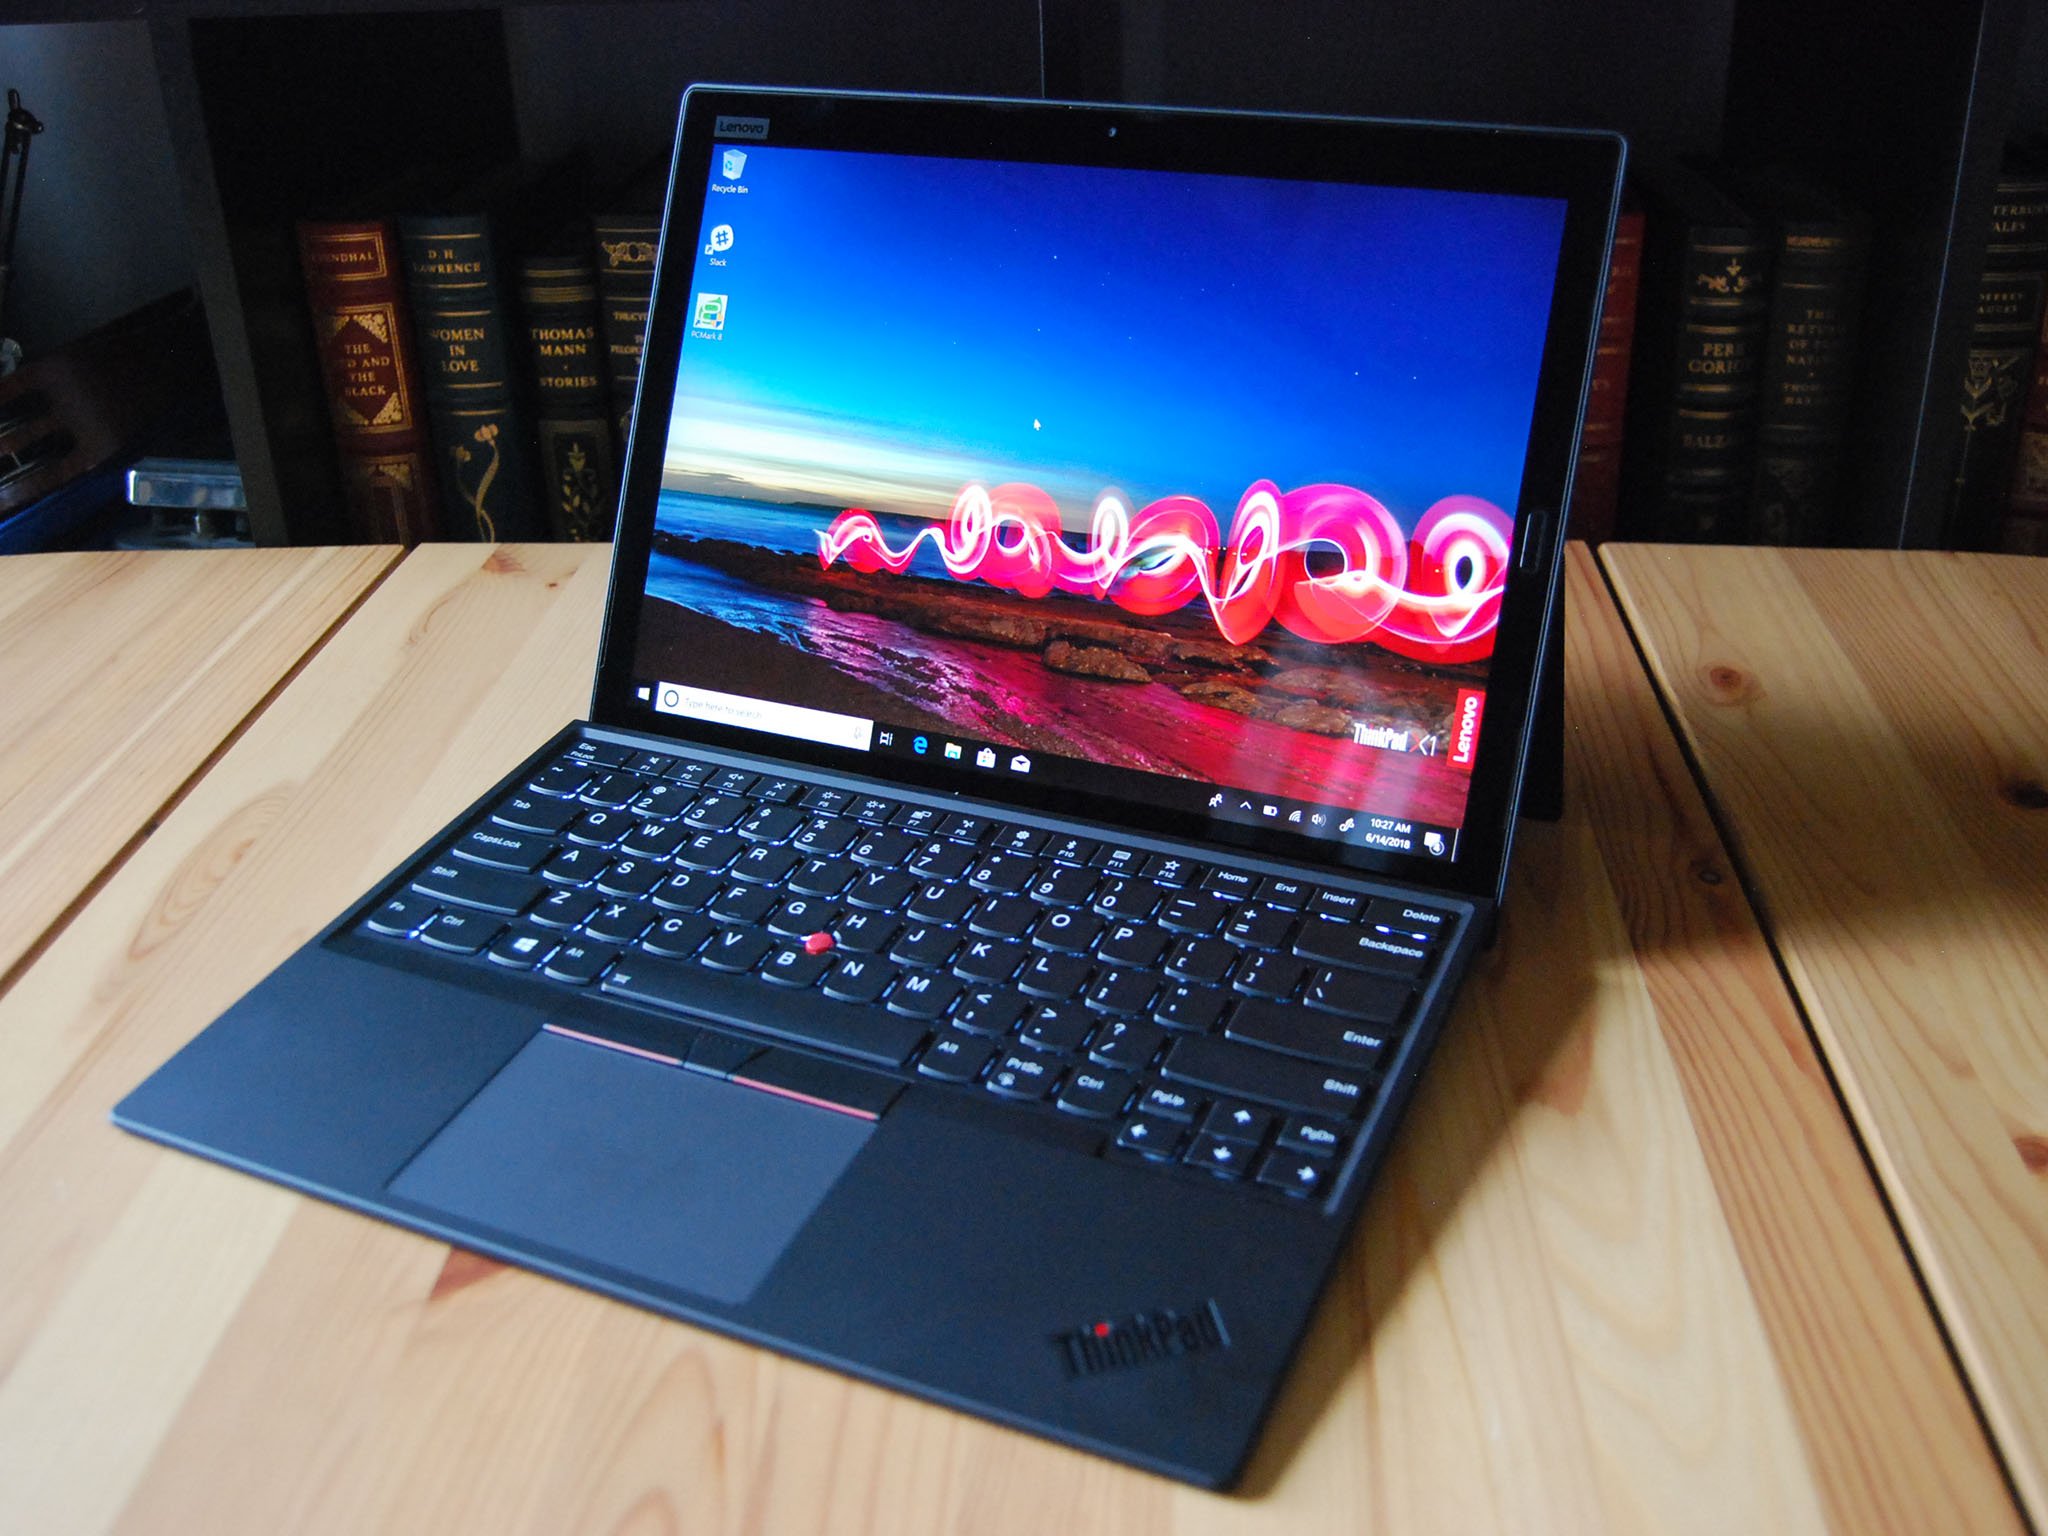 Lenovo thinkpad x1 tablet 3rd gen review halo 4 xbox 360